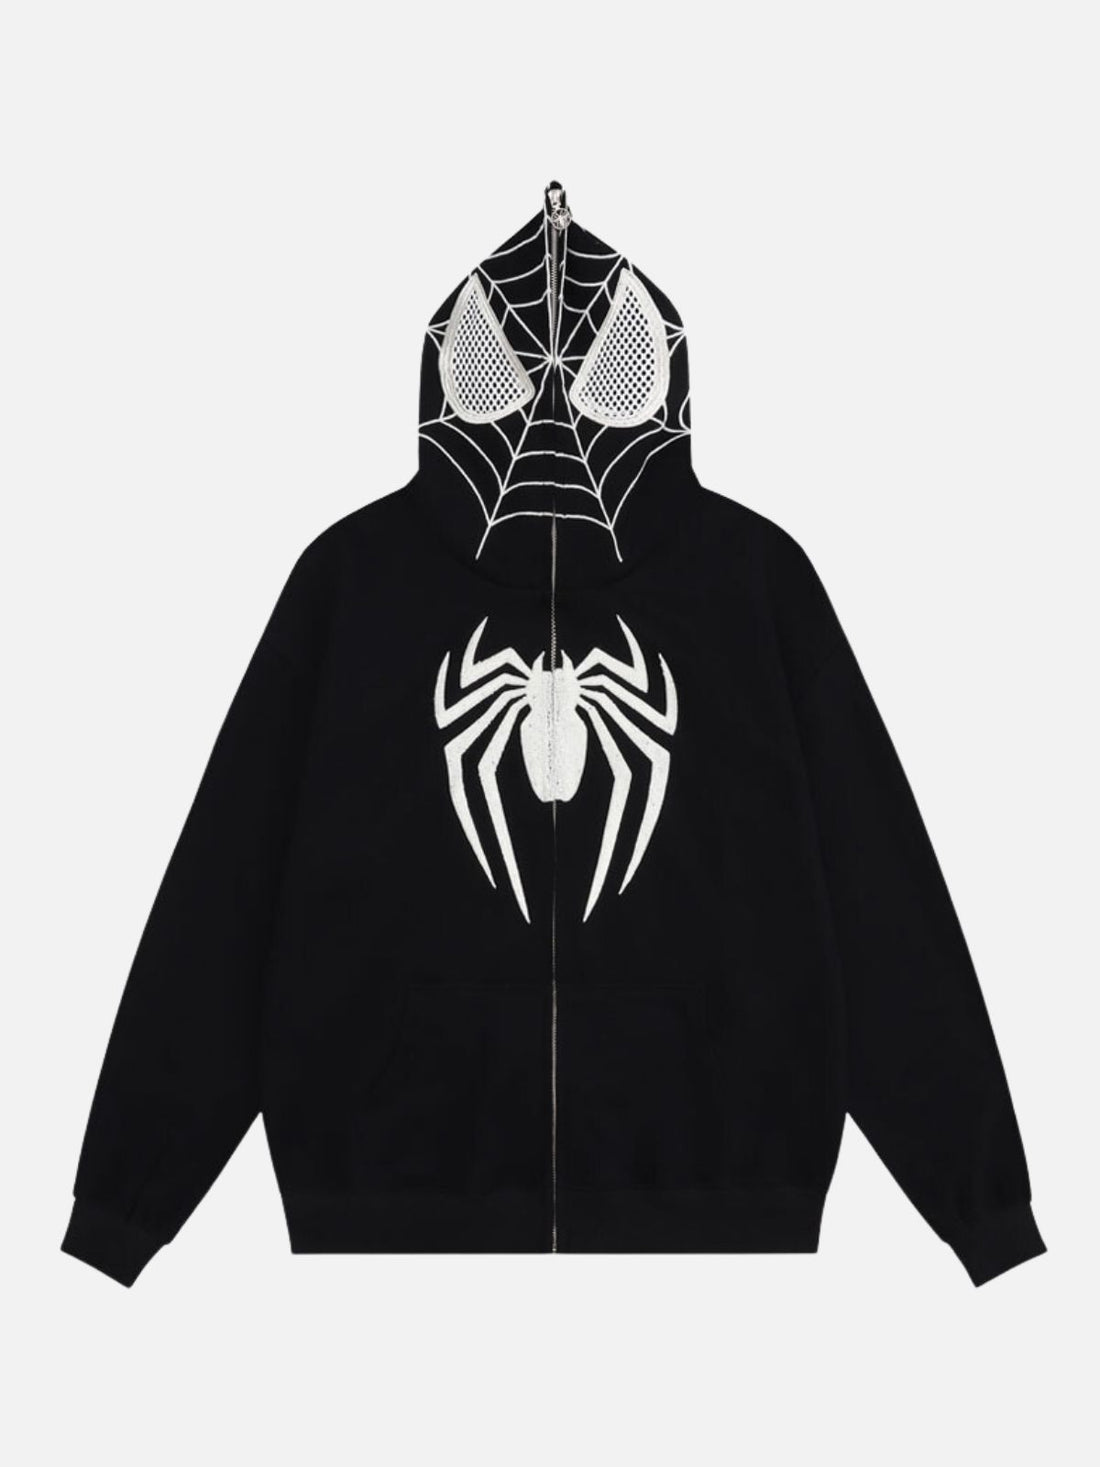 SPIDER - Embroidered Zip Up Hoodie Black | Teenwear.eu